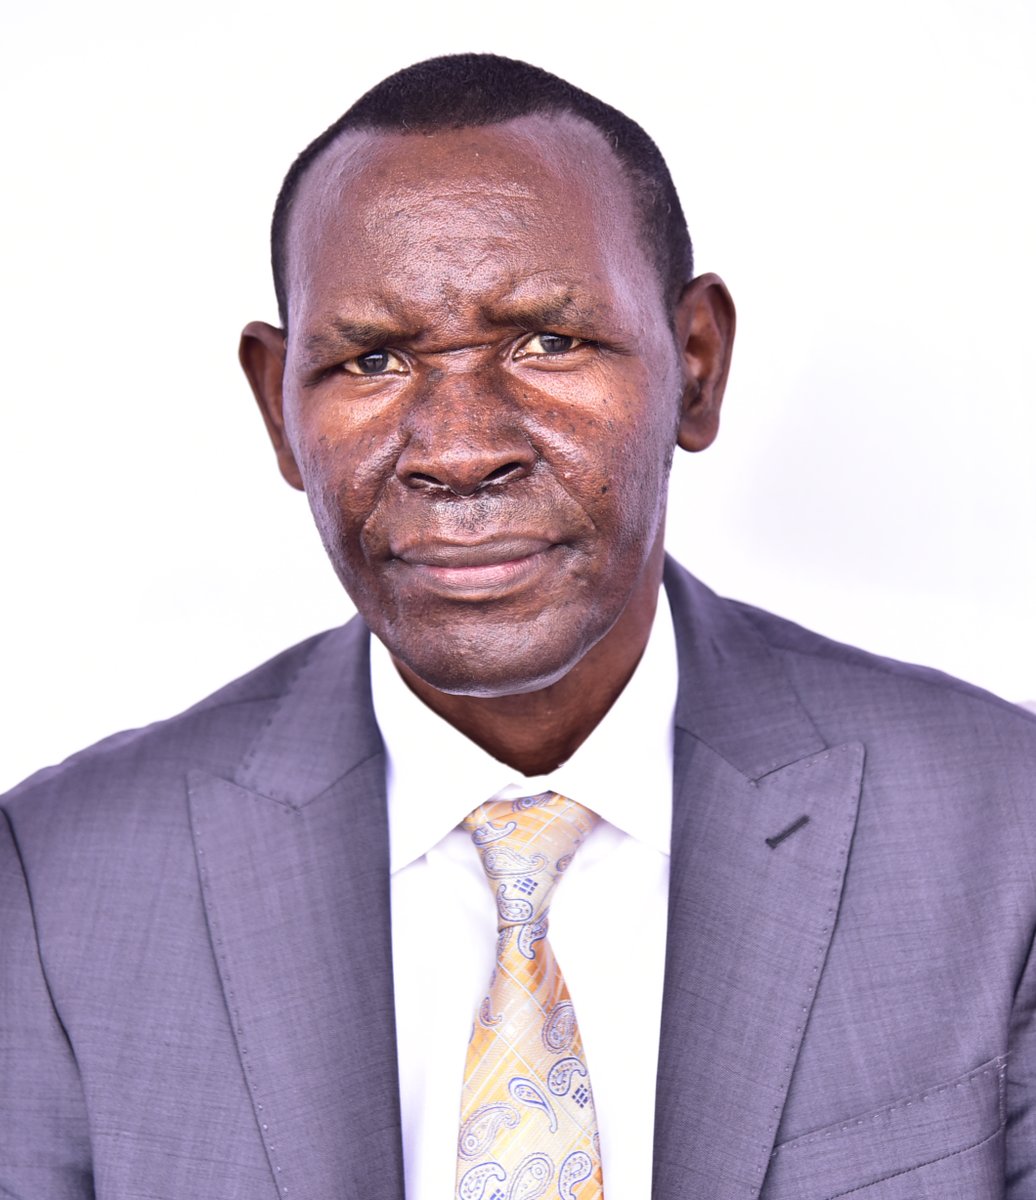 #KnowYourMP

Name: Hon. Alex Byarugaba Bakunda

Constituency: Isingiro County South

Profession: Consultant

Political Party: NRM
#11thParliament